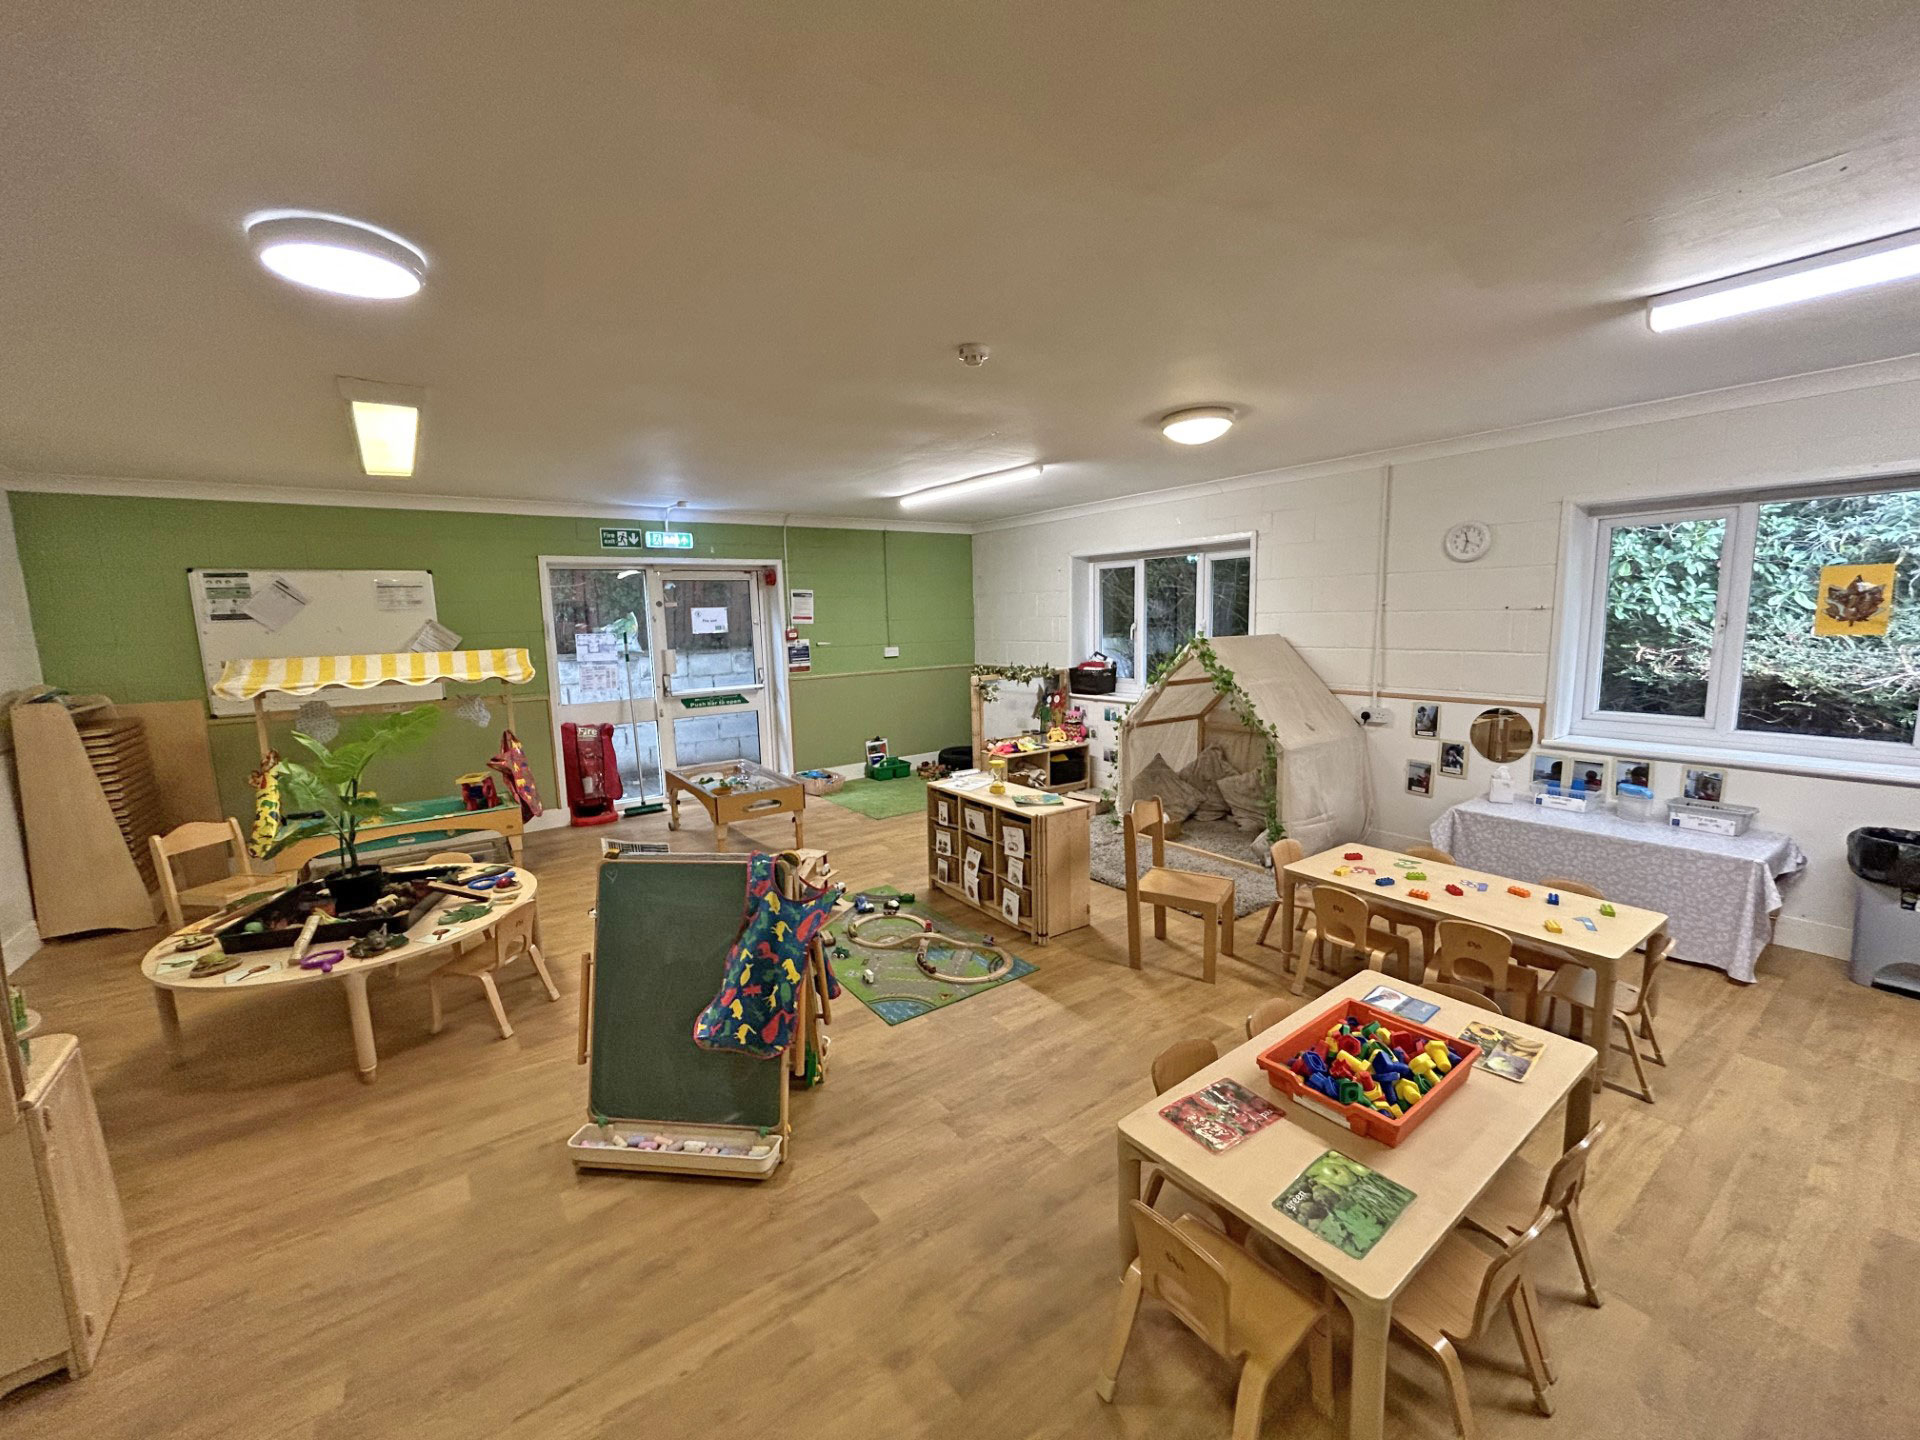 Springfield Lodge Day Nursery and Preschool Preschool